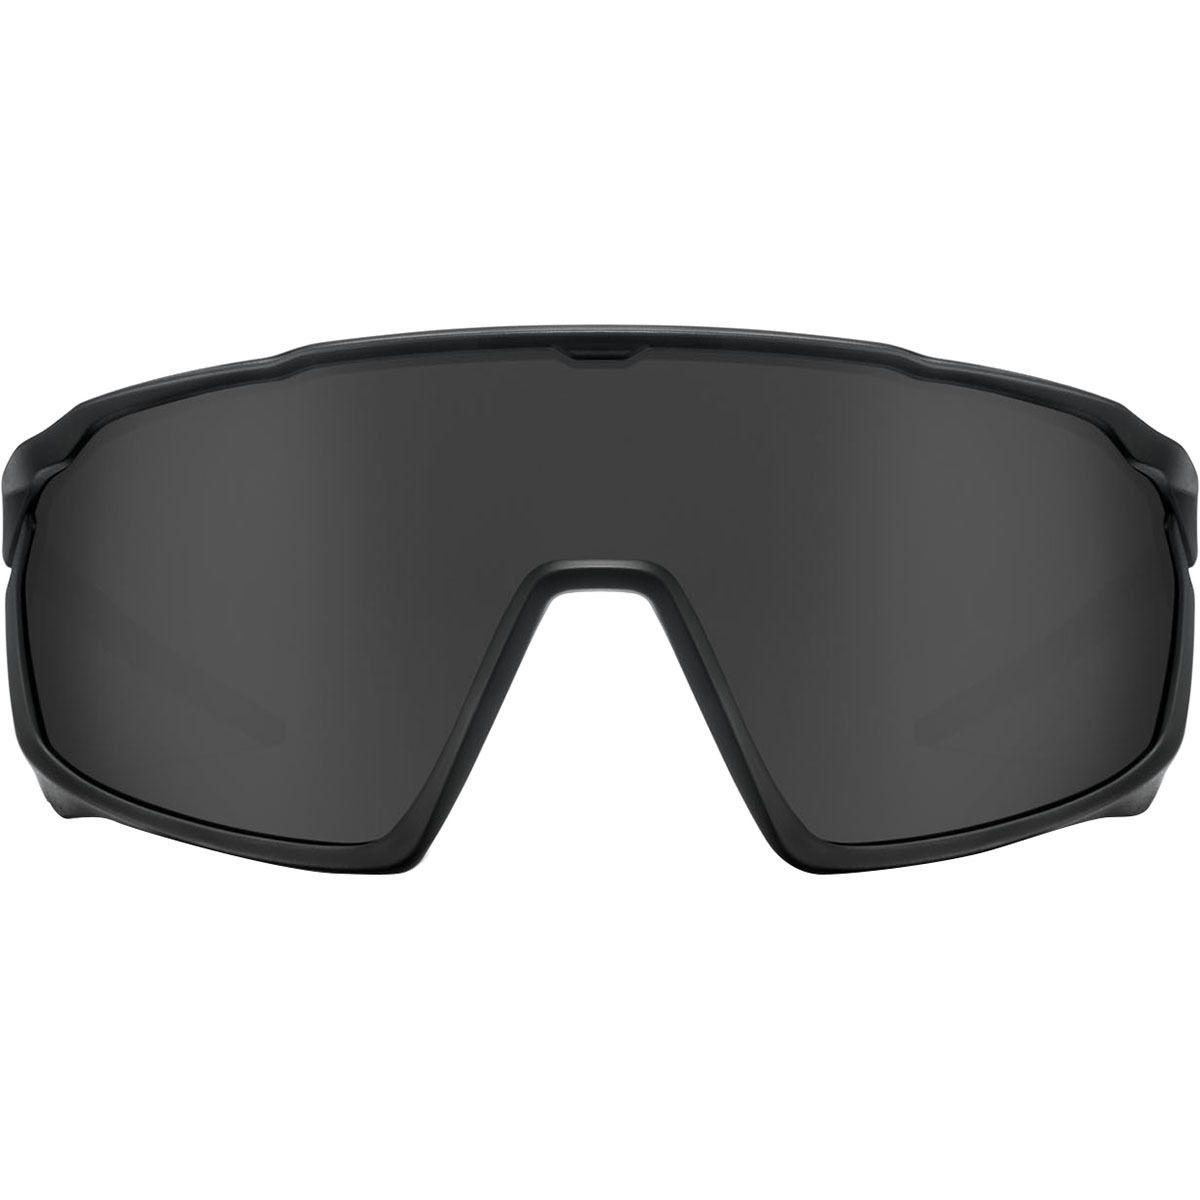 Roka Cp-1x Sunglasses in Black for Men - Lyst